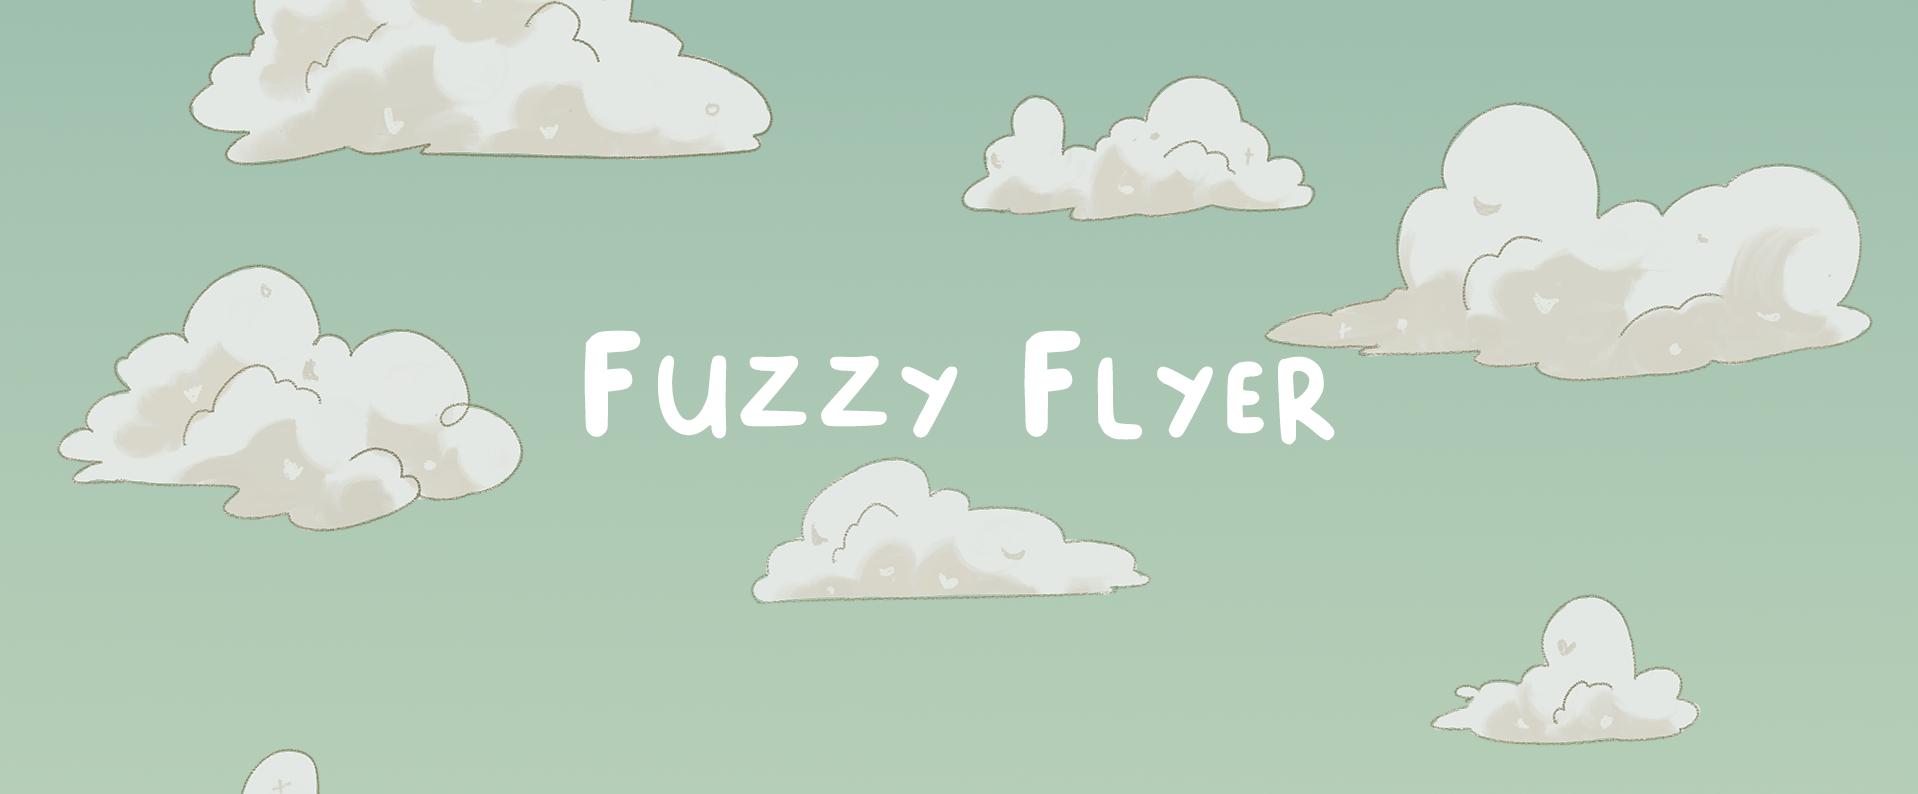 Fuzzy Flyer